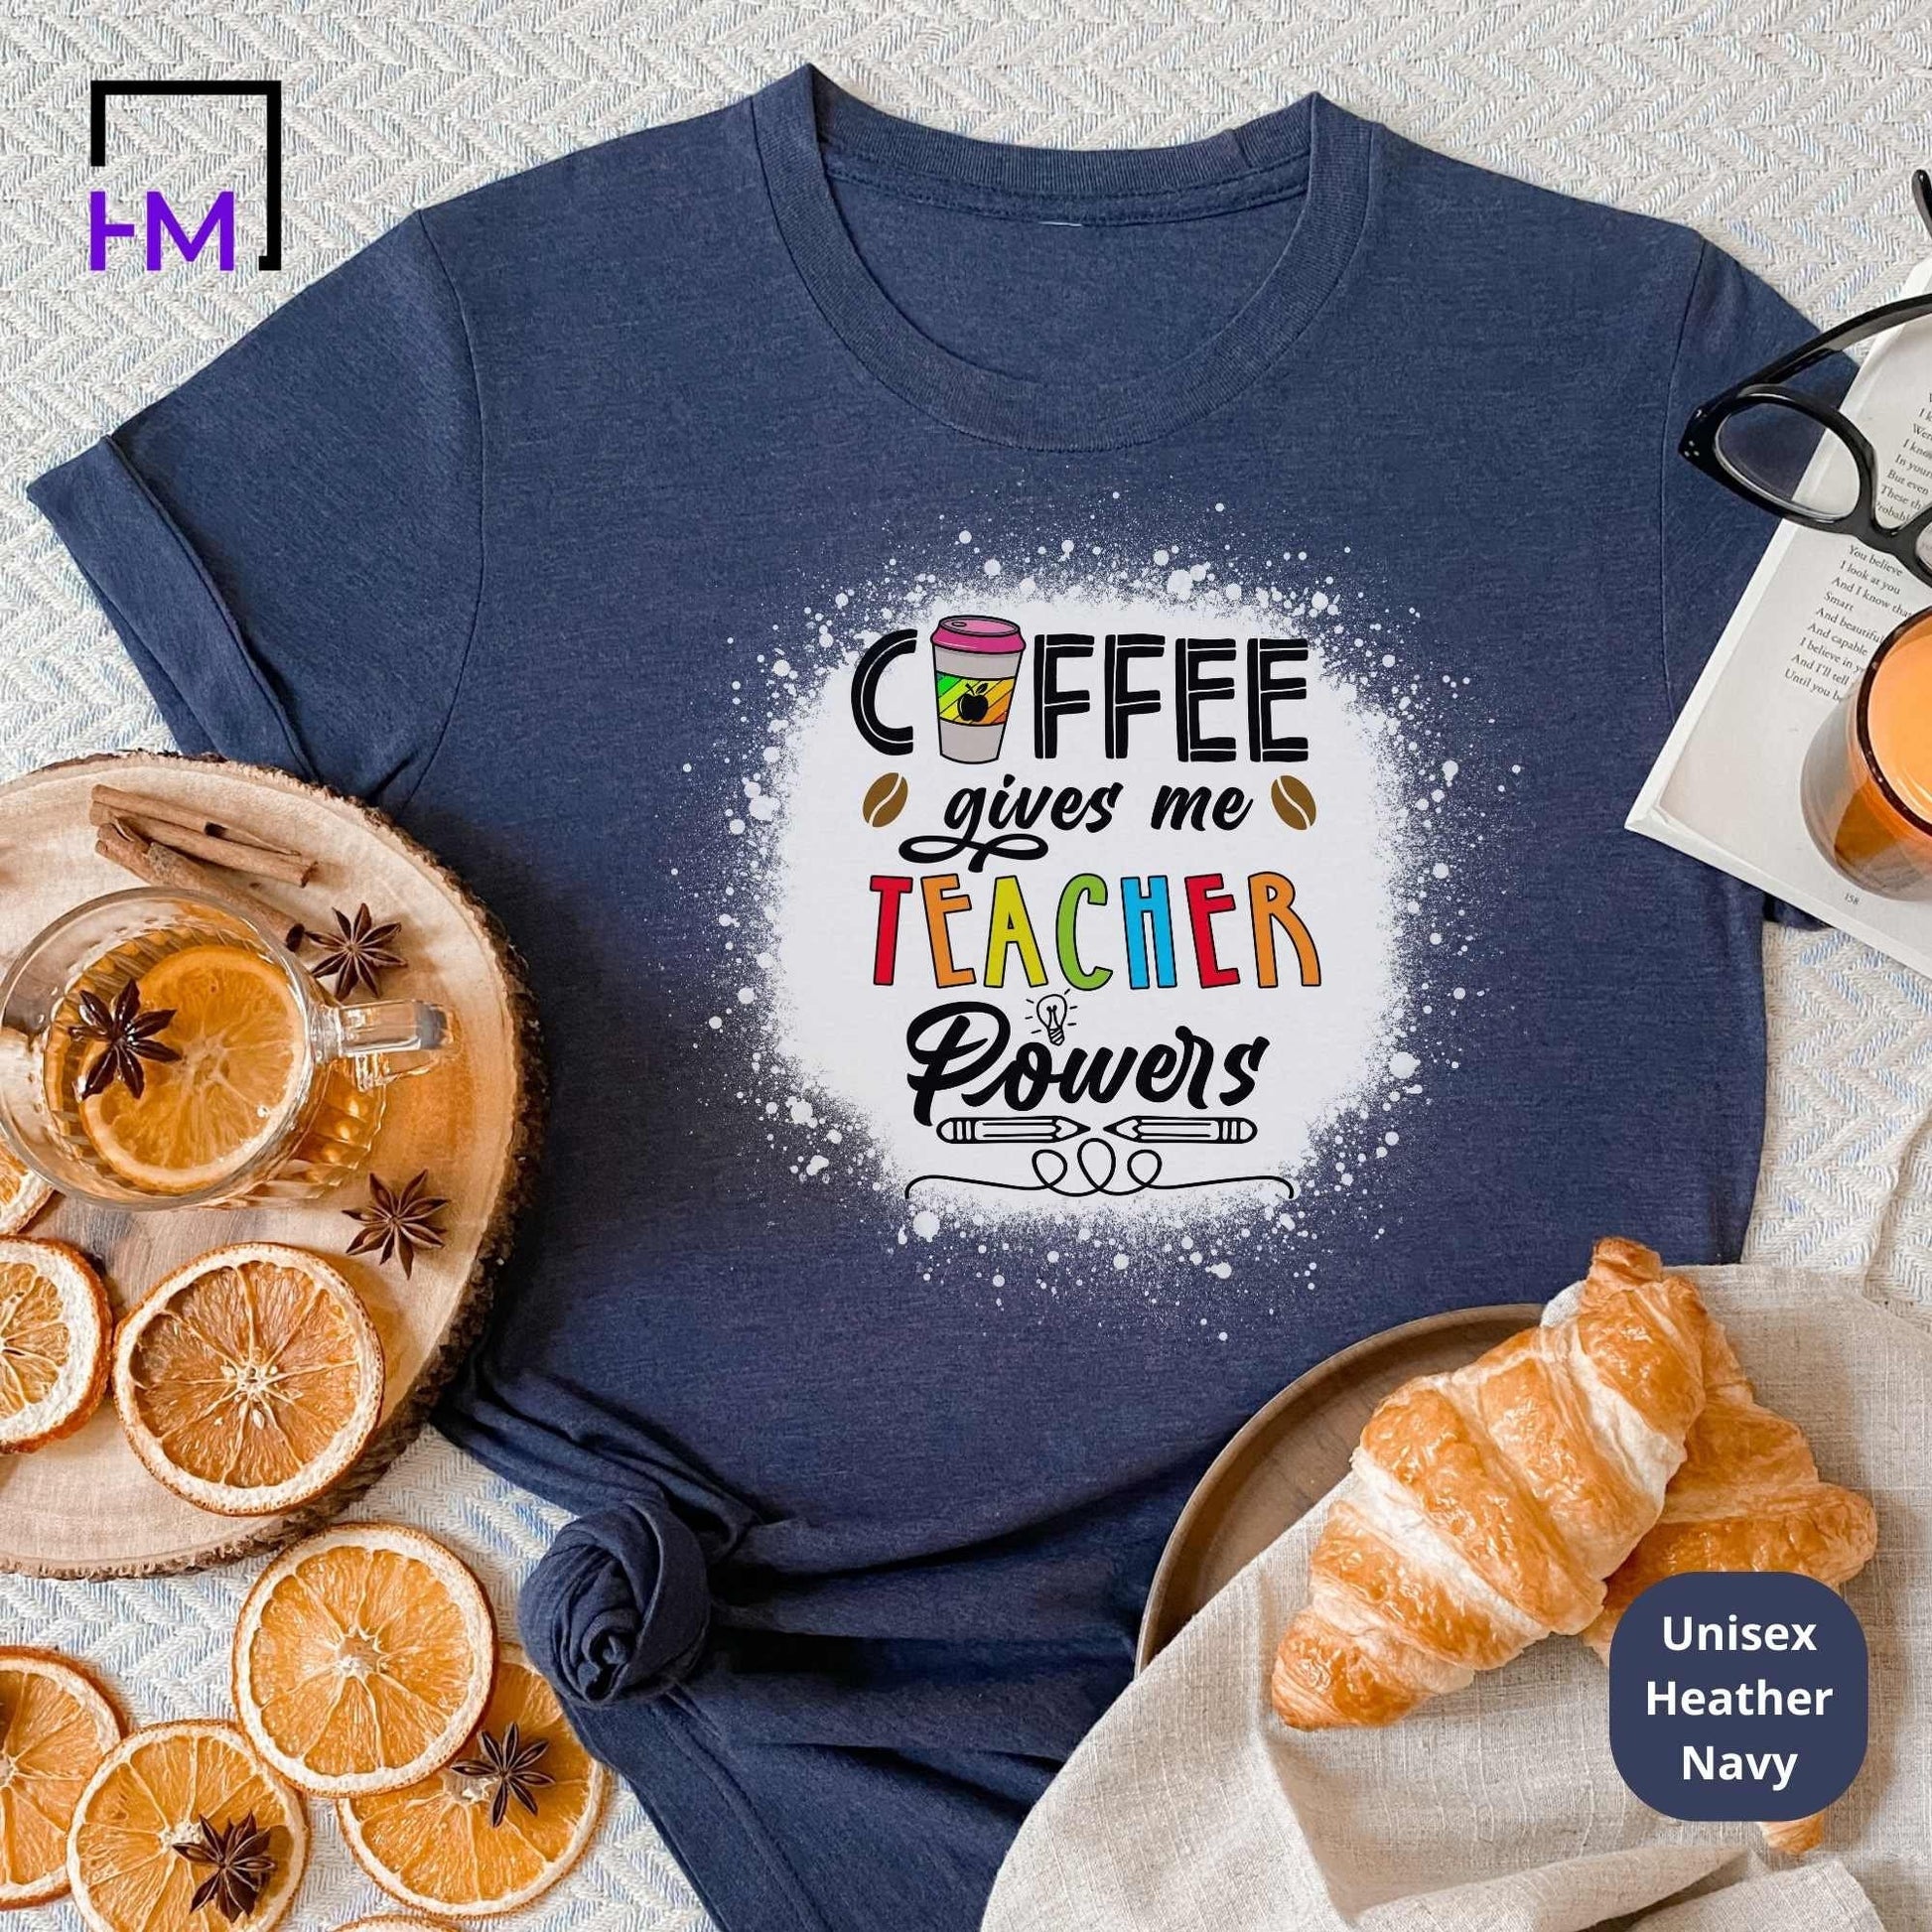 Coffee Teacher Sweatshirt | Warm Cozy Fall Crewneck Sweater for Pumpkin Spice Educators & Latte Loving Ladies, Avail in T-Shirts, Plus Size HMDesignStudioUS